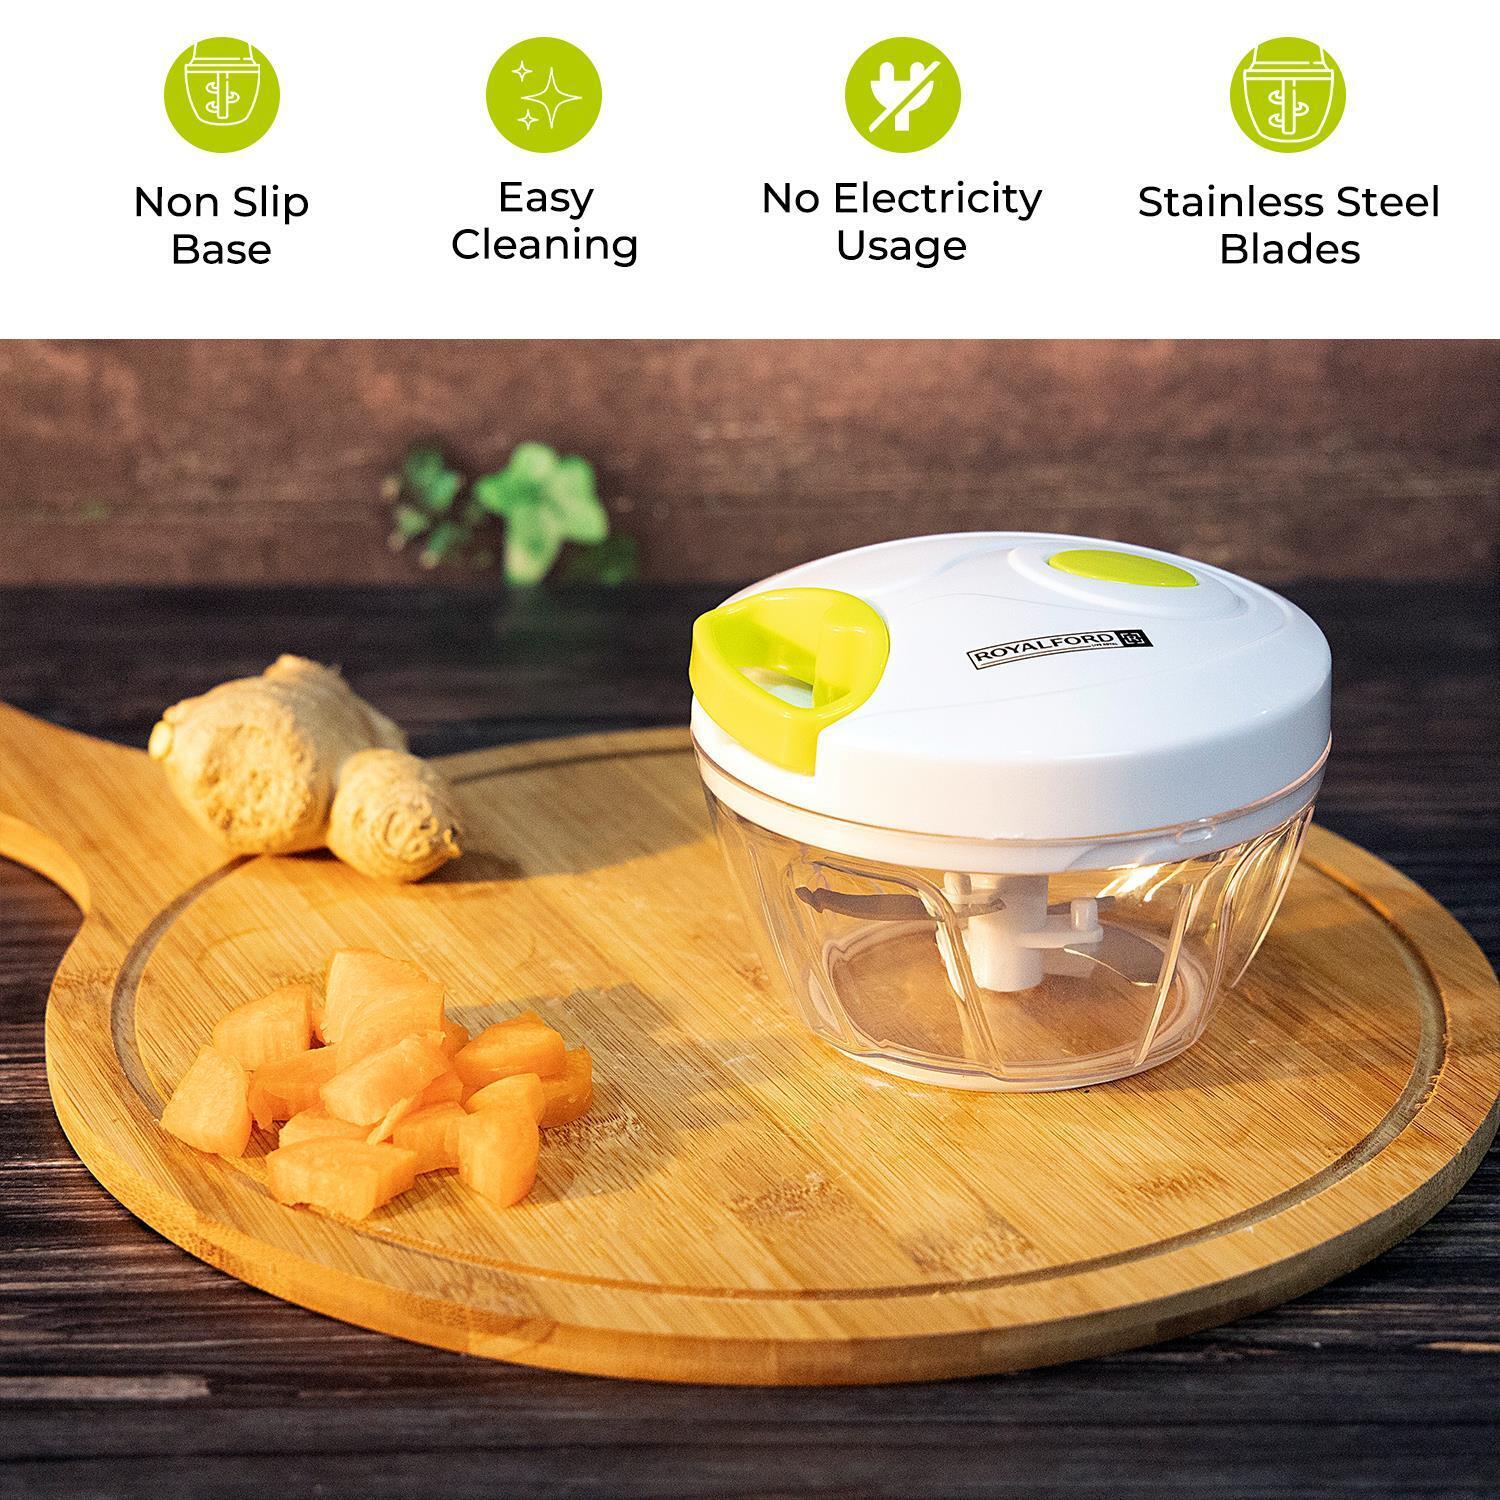 White & Green Manual Mini Food Chopper & Food Processor